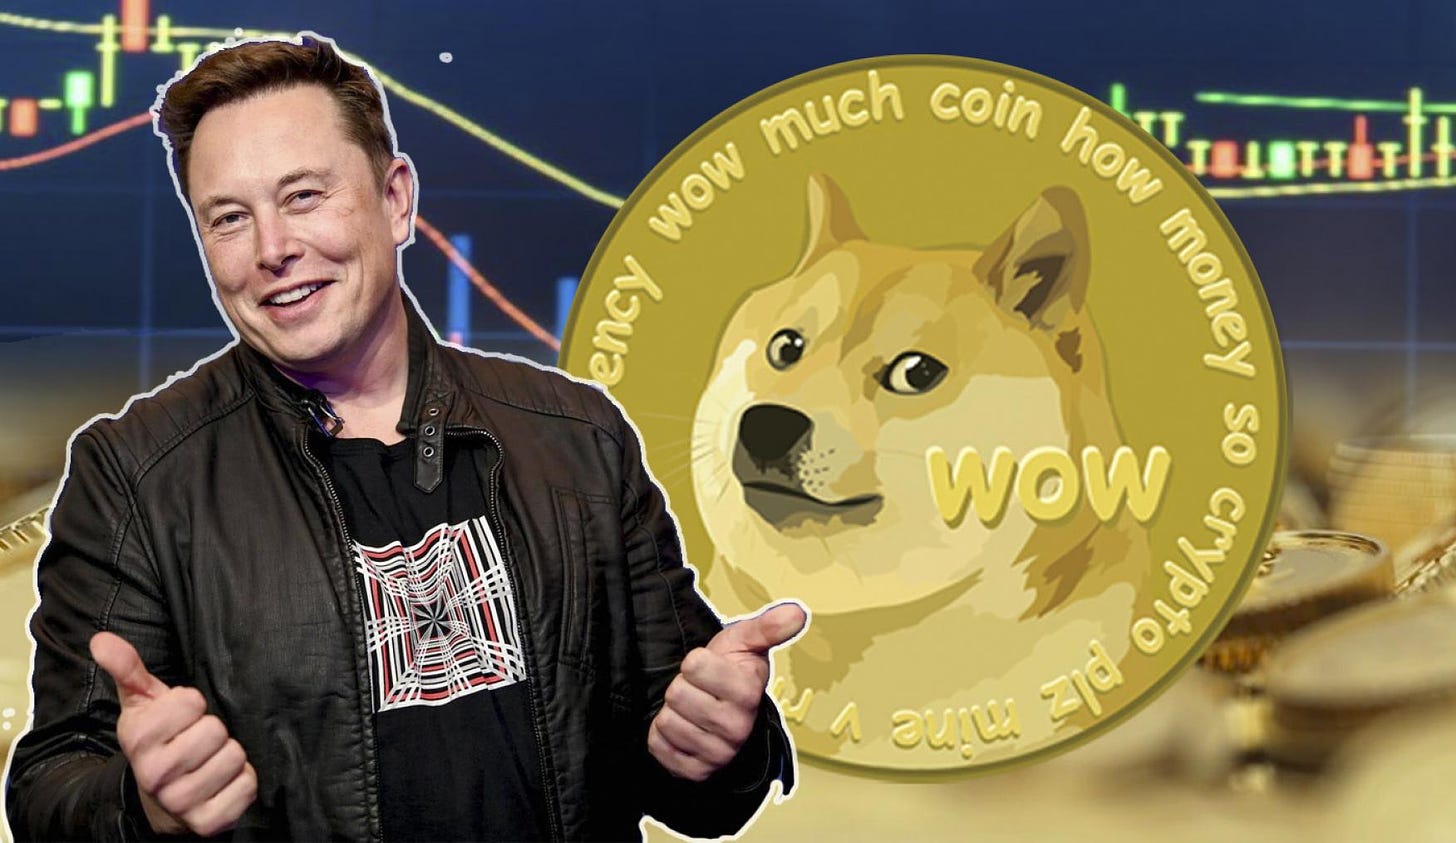 Musk continúa criticando el bitcoin y ve al dogecoin "prometedor" |  Business Insider España